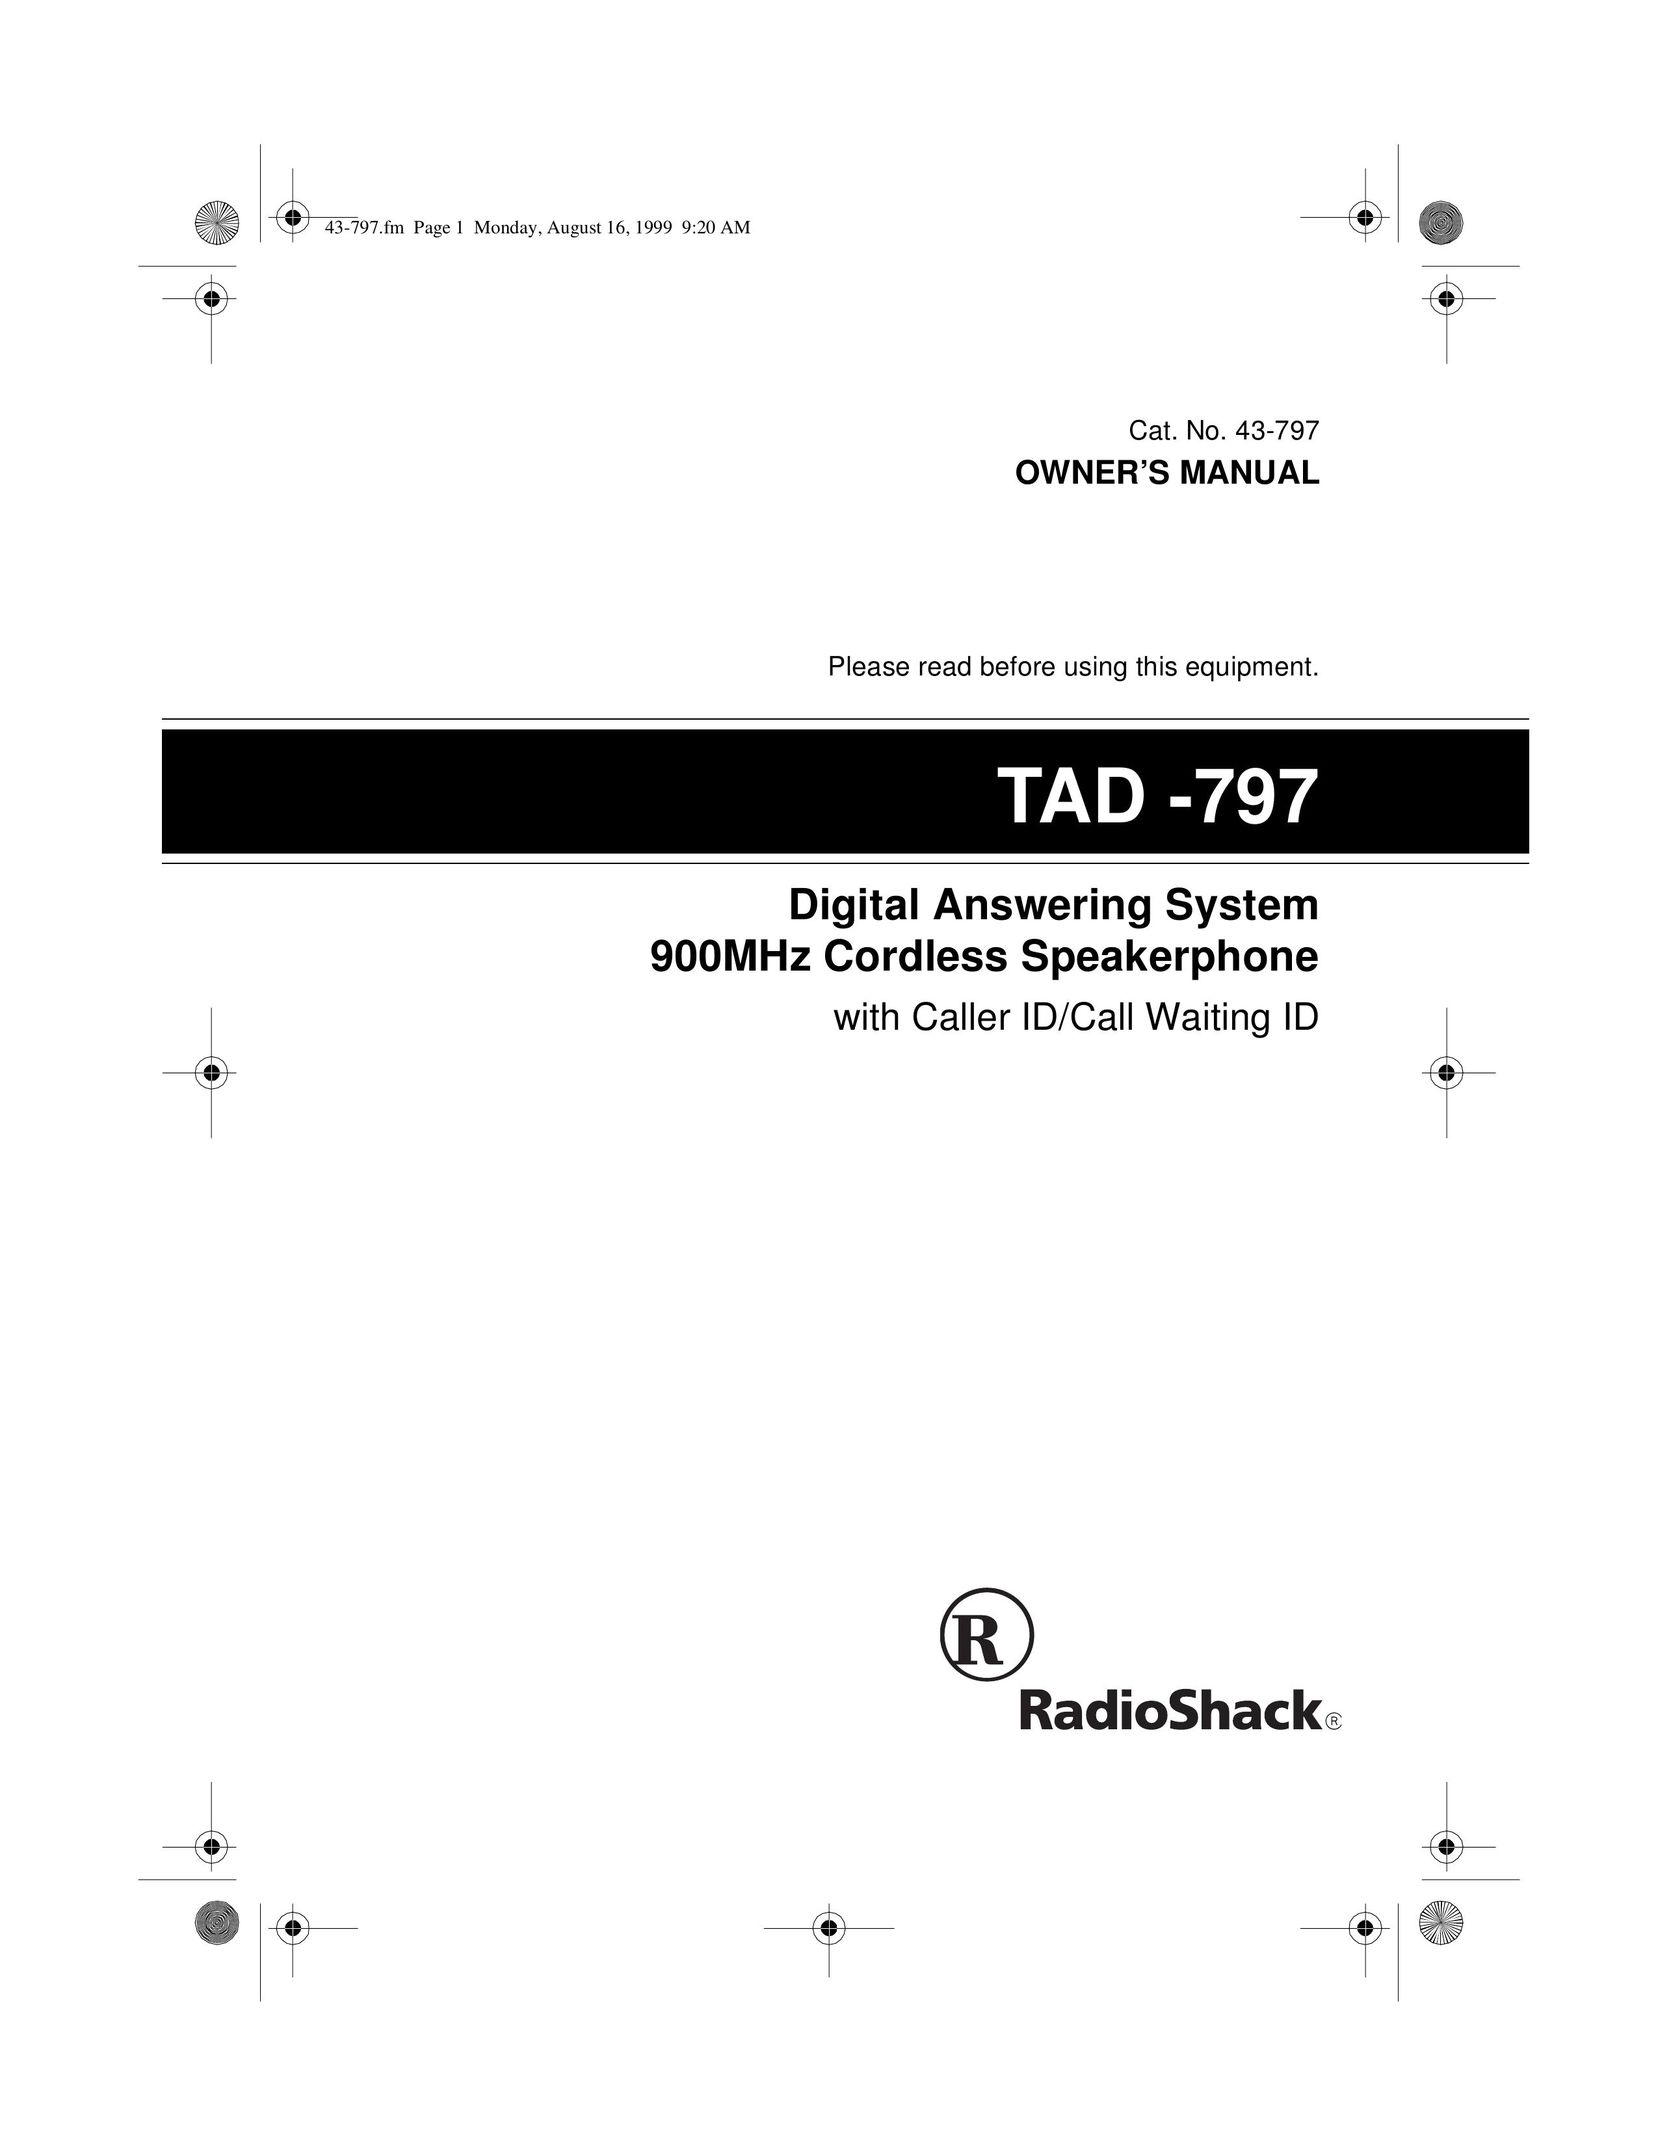 Radio Shack TAD -797 Answering Machine User Manual